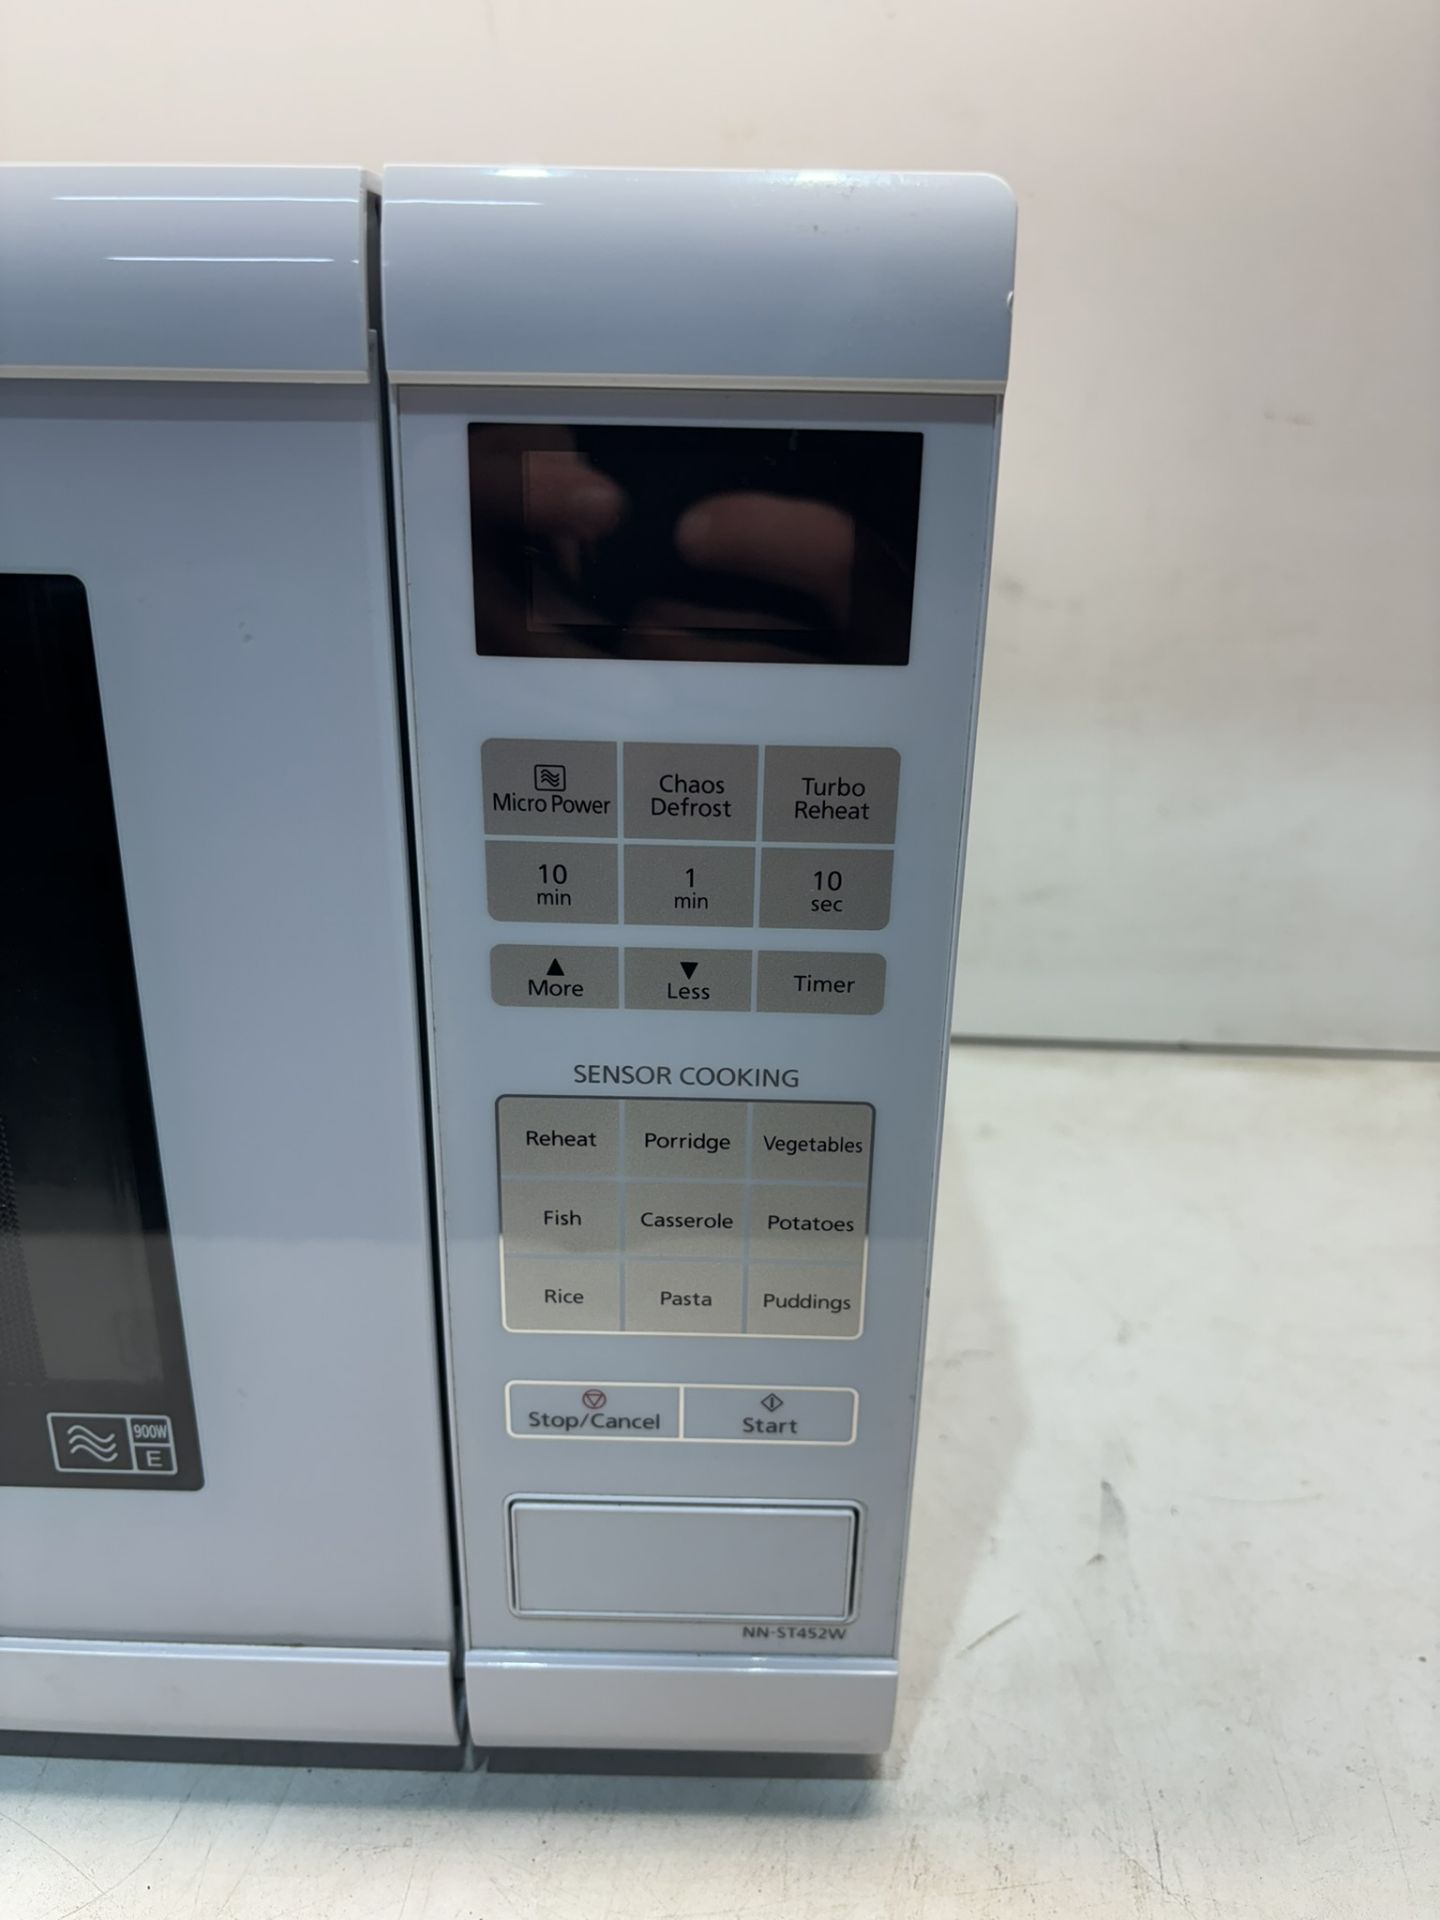 Panasonic NN-ST452W 900W Microwave Oven - Image 2 of 4